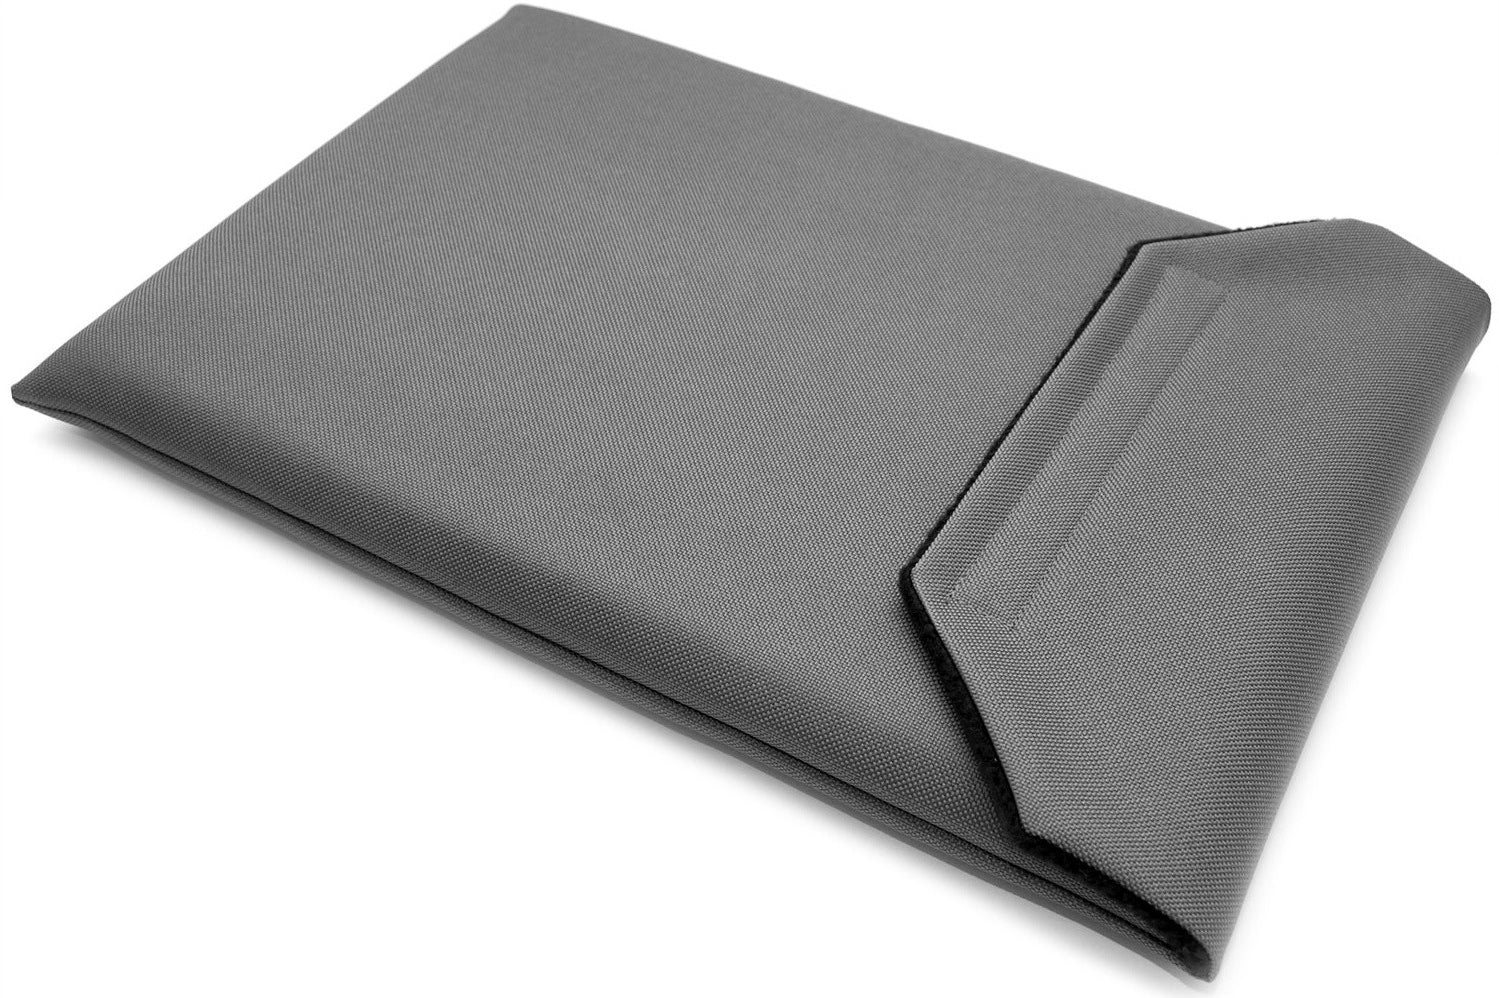 Dell Inspiron 14 7000 Sleeve Case - Grey